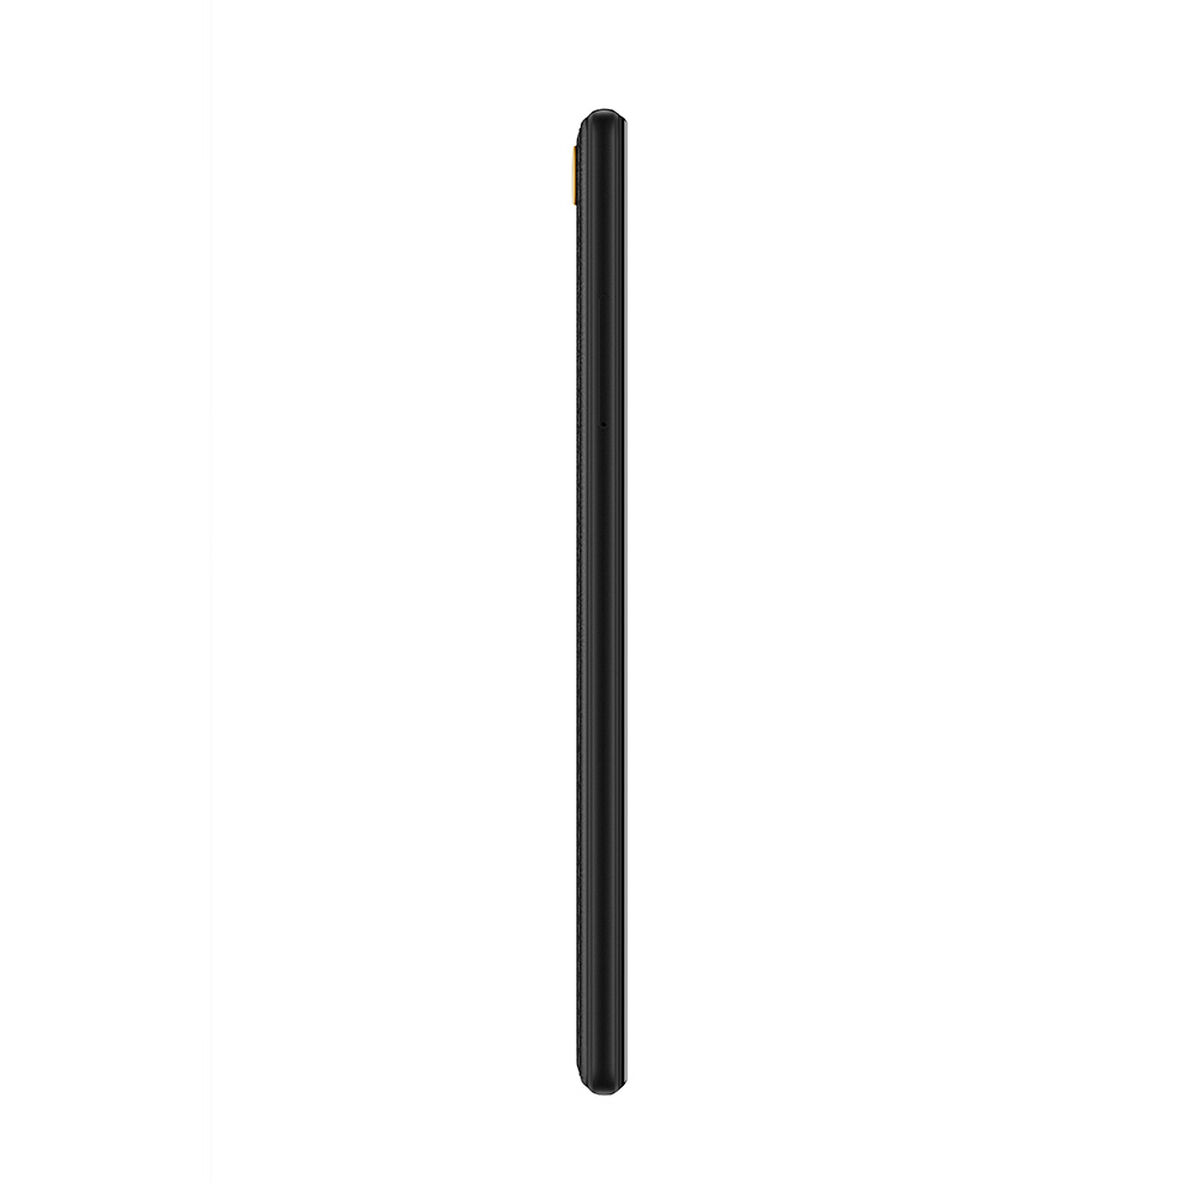 Celular Huawei Y5 Neo 16GB 5,5" Negro WOM